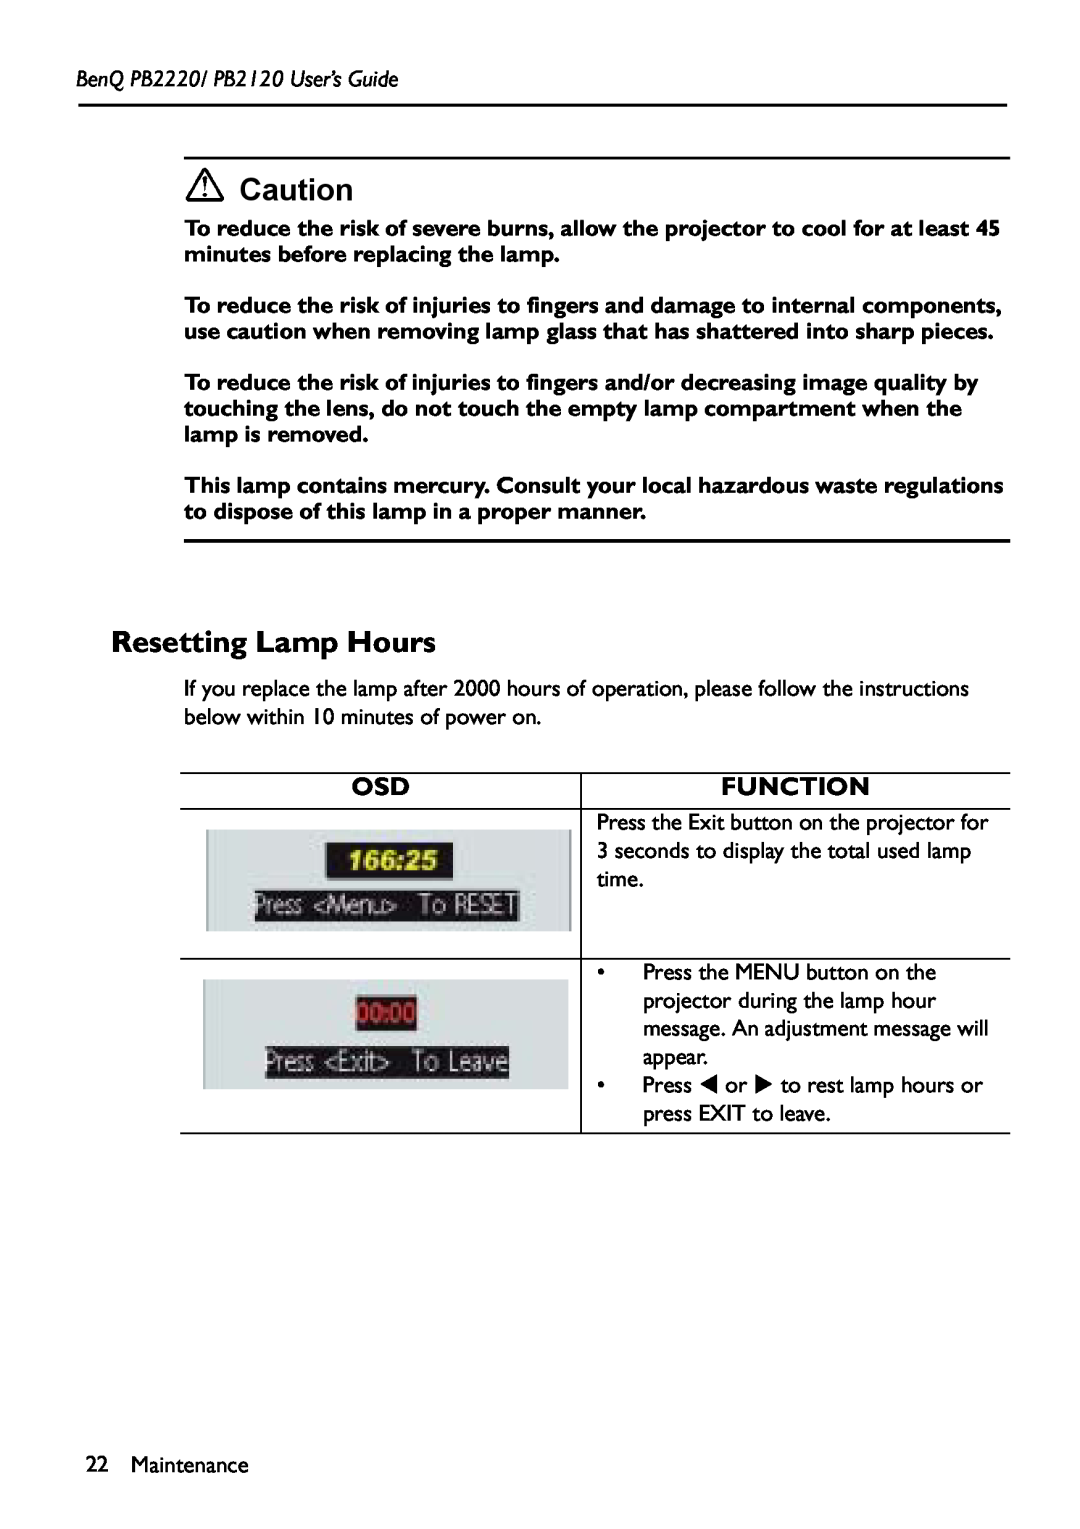 BenQ manual Resetting Lamp Hours, Function, BenQ PB2220/ PB2120 User’s Guide 